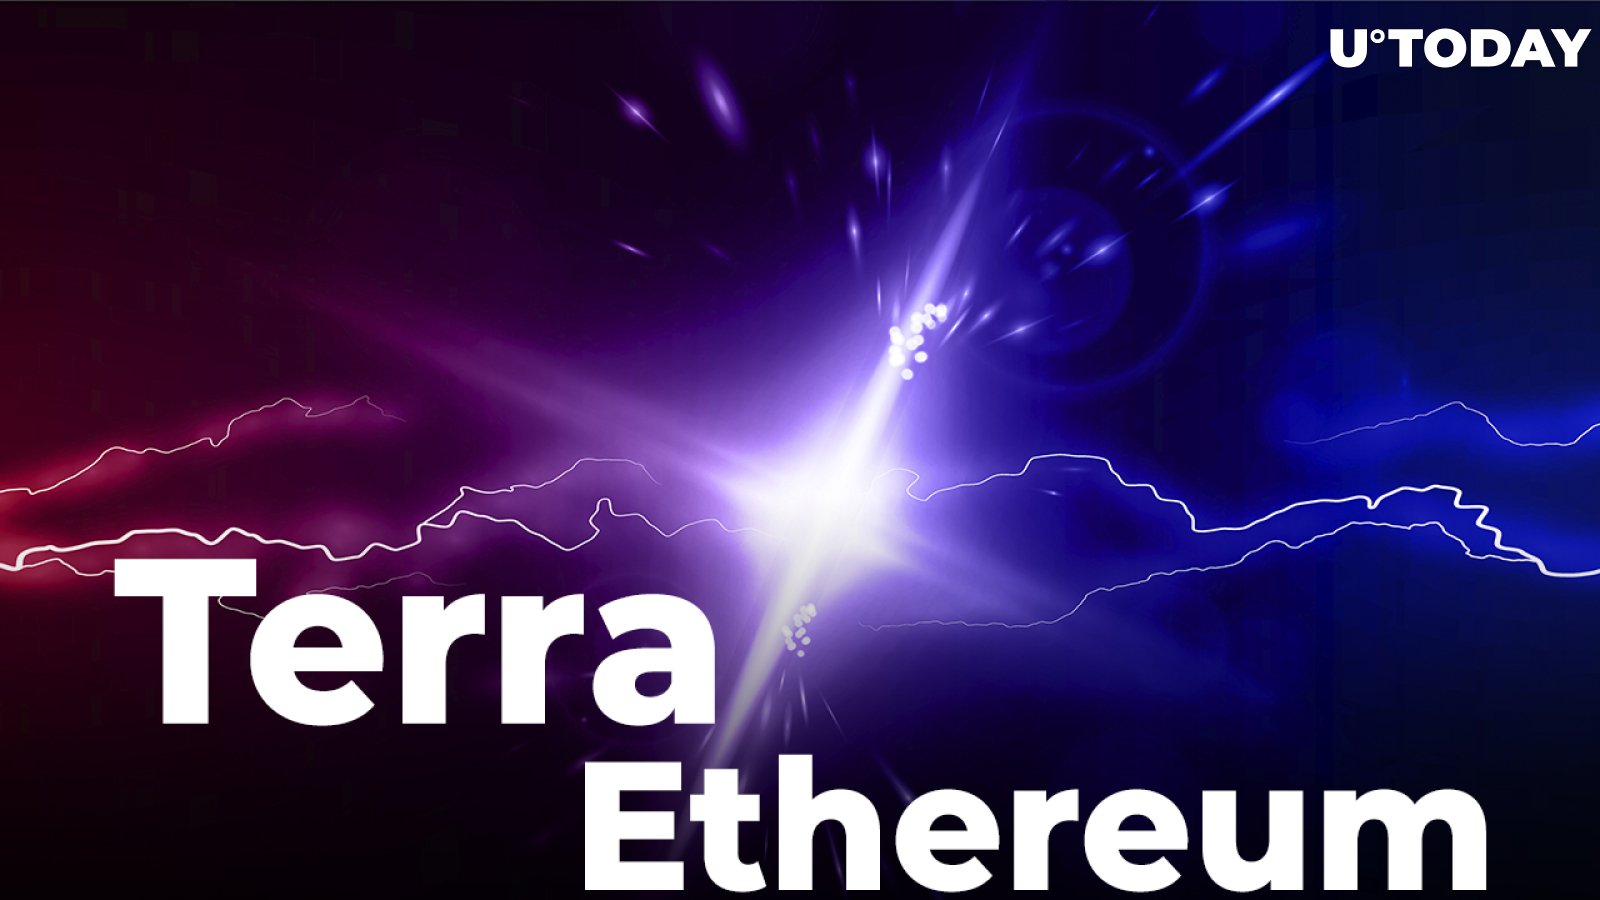 Top Market Technician Expects Terra to Challenge Ethereum